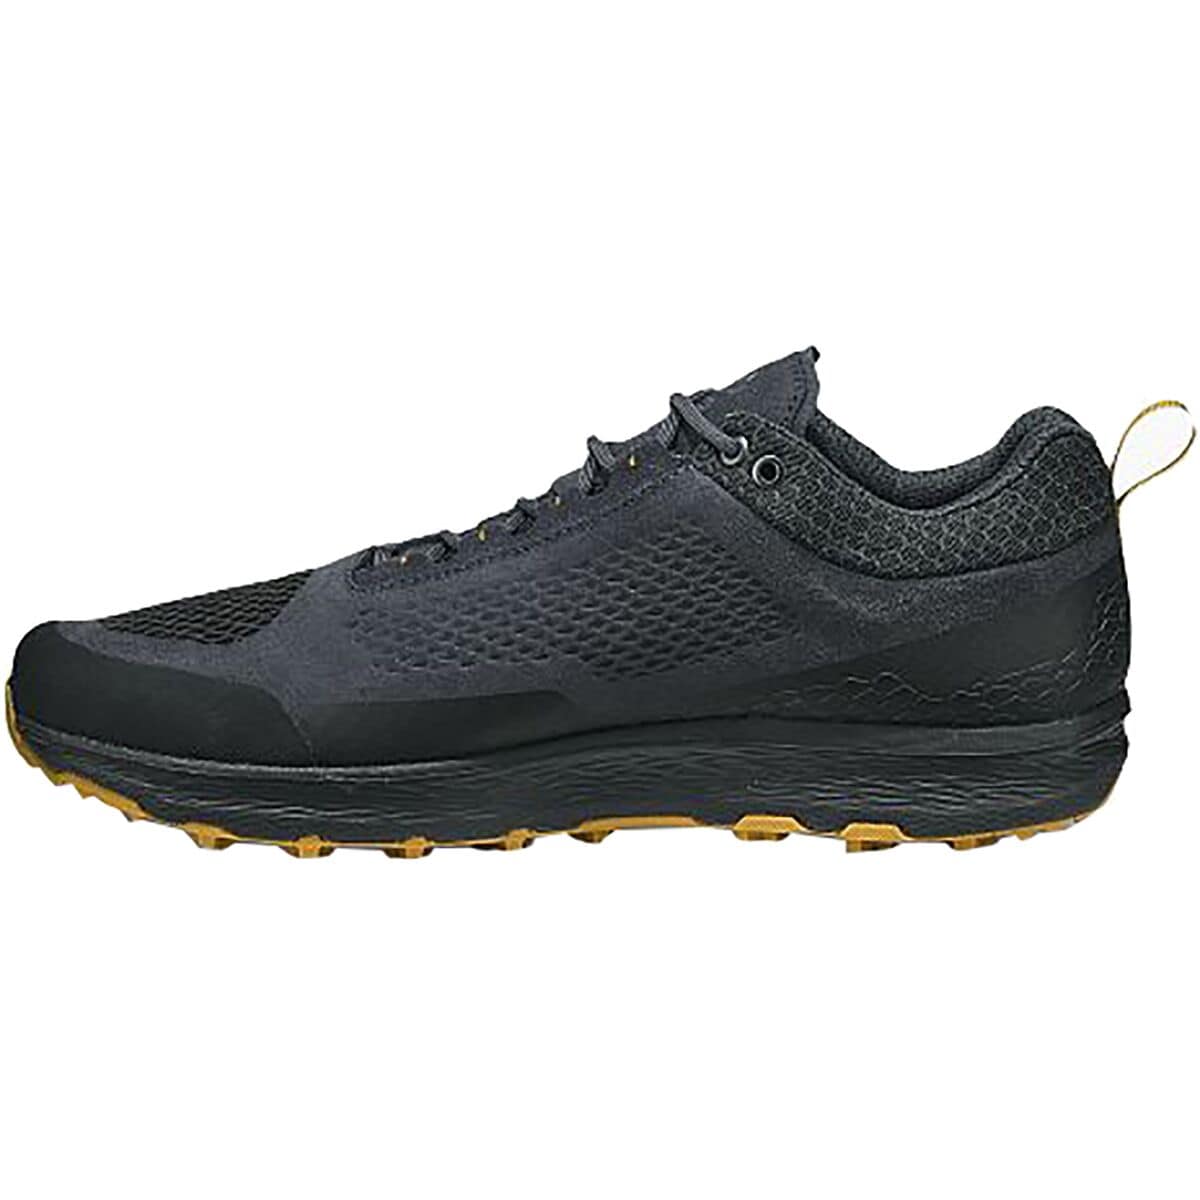 Vasque Breeze LT NTX Low Hiking Shoe - Men's - Footwear